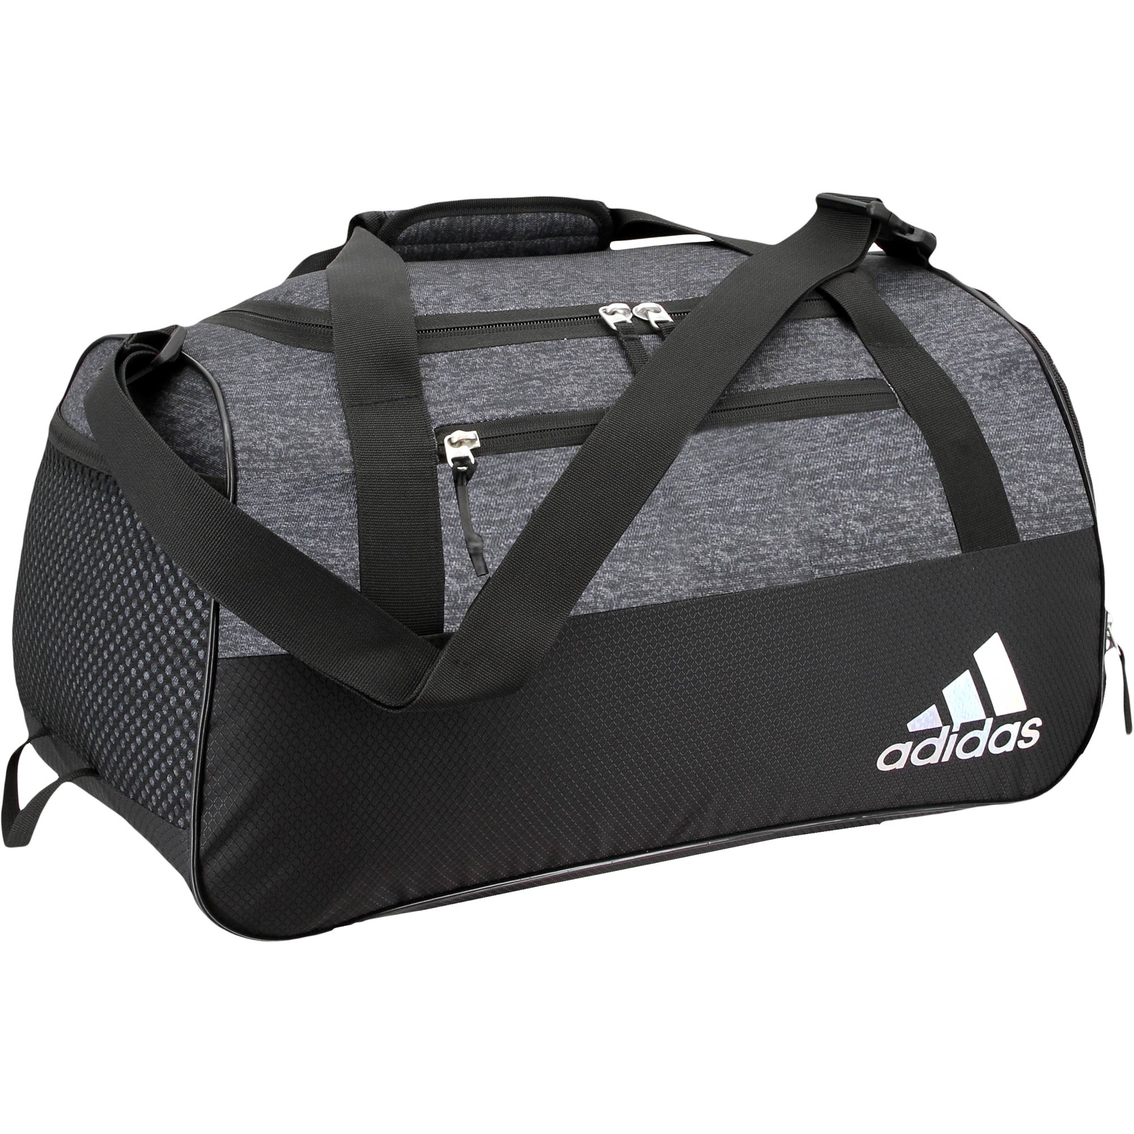 Adidas Originals Santiago Duffel Bag | Luggage | Clothing & Accessories ...